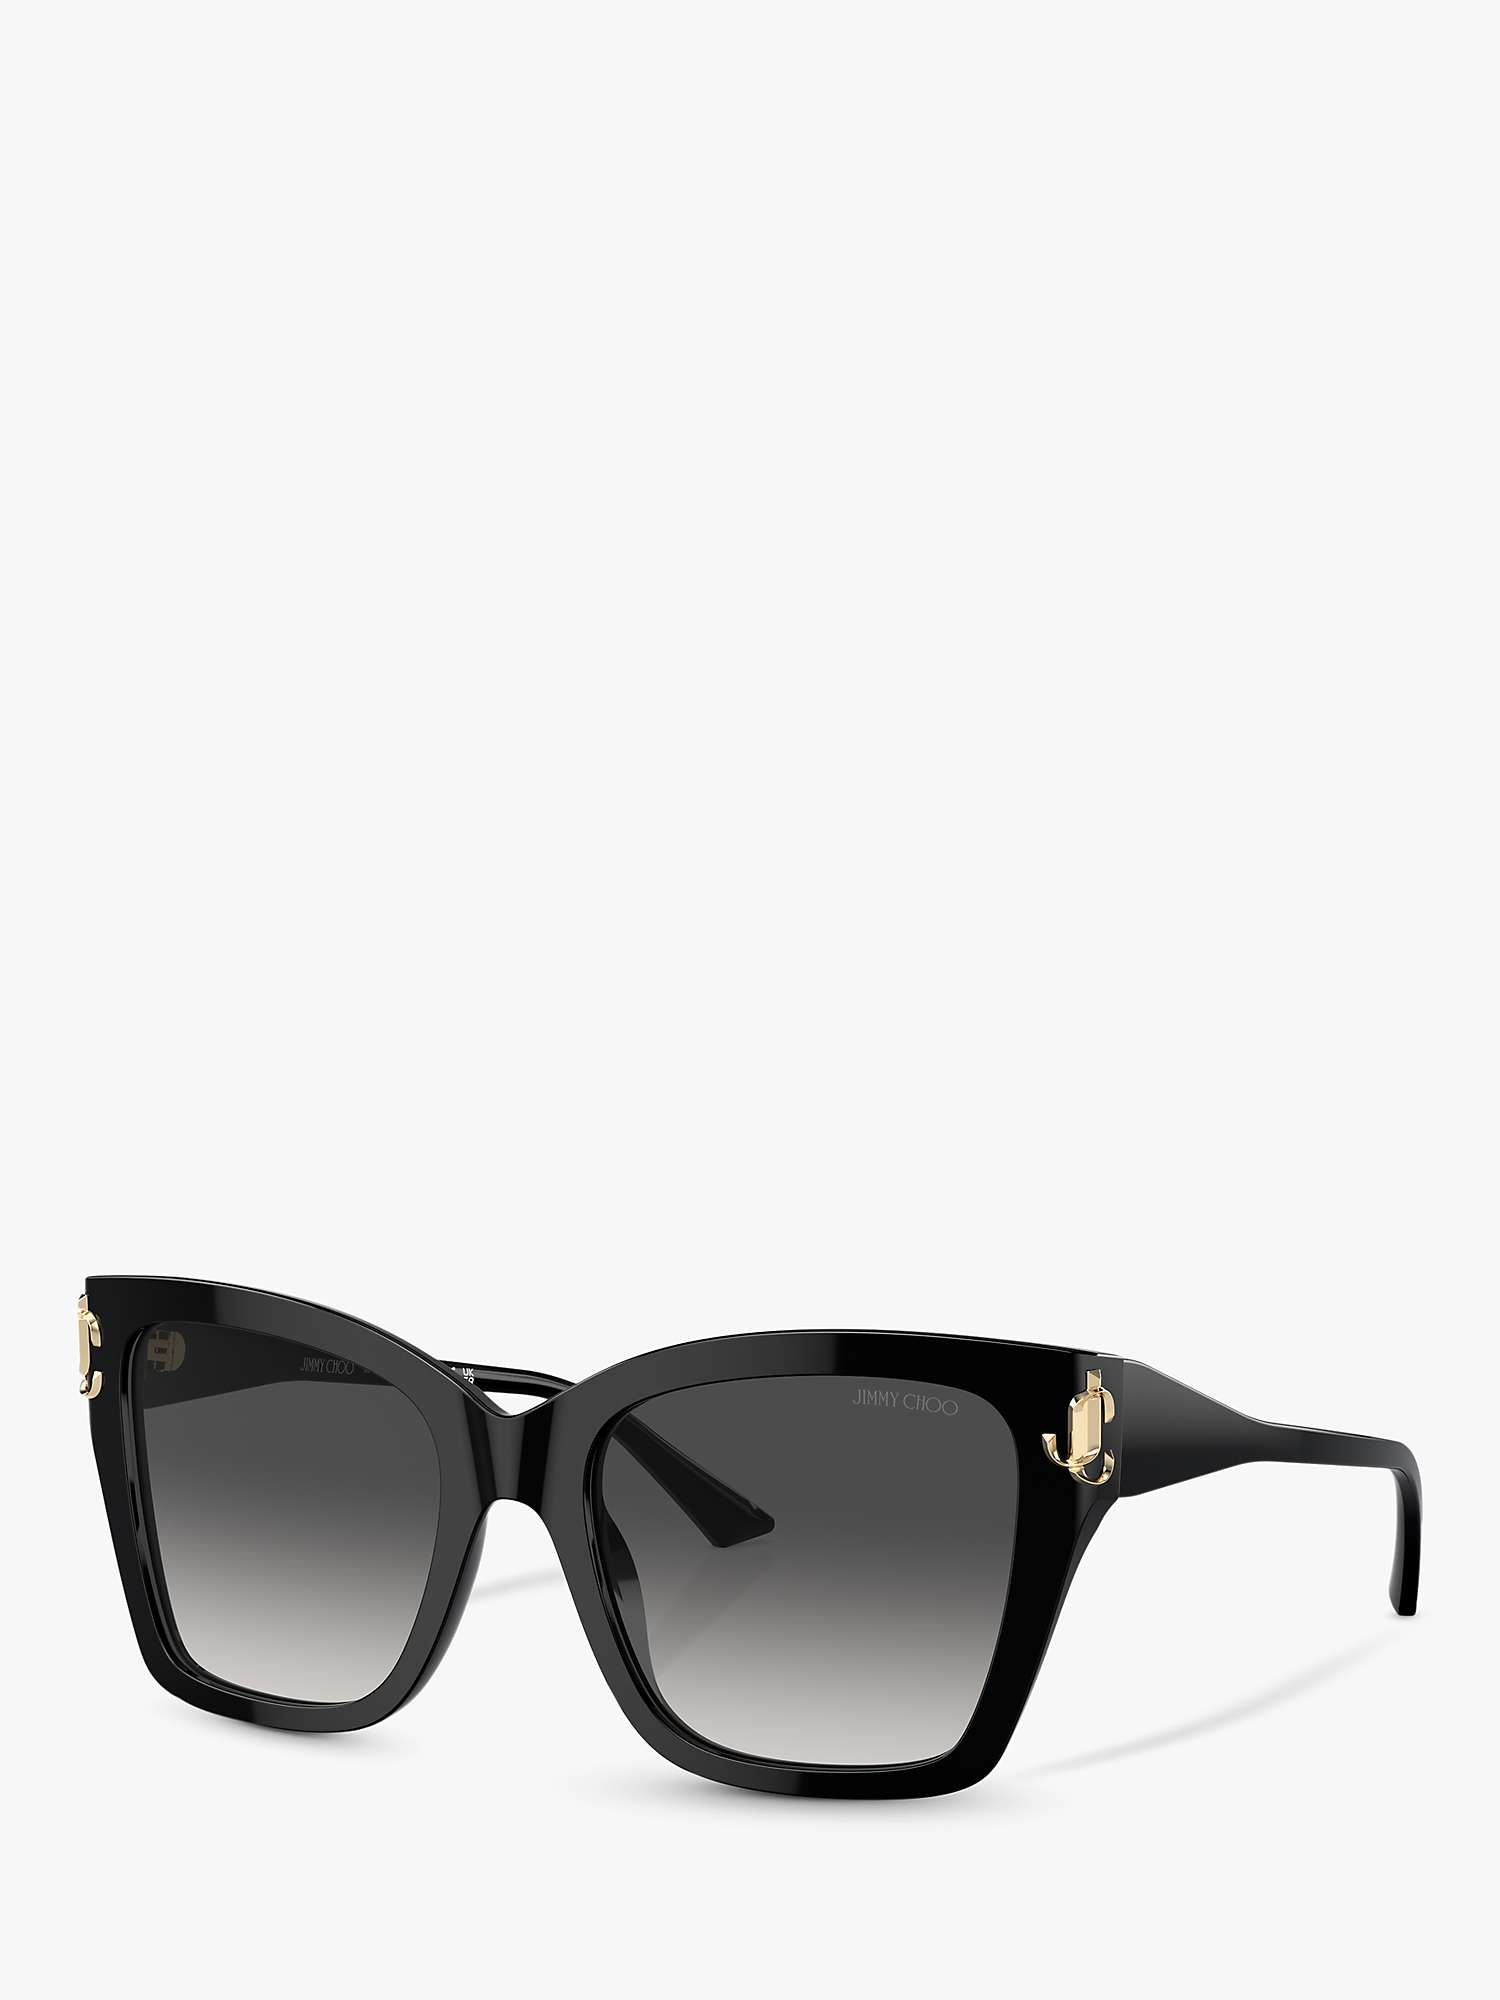 Buy Jimmy Choo JC5012 Women's Irregular Sunglasses, Black/Grey Gradient Online at johnlewis.com